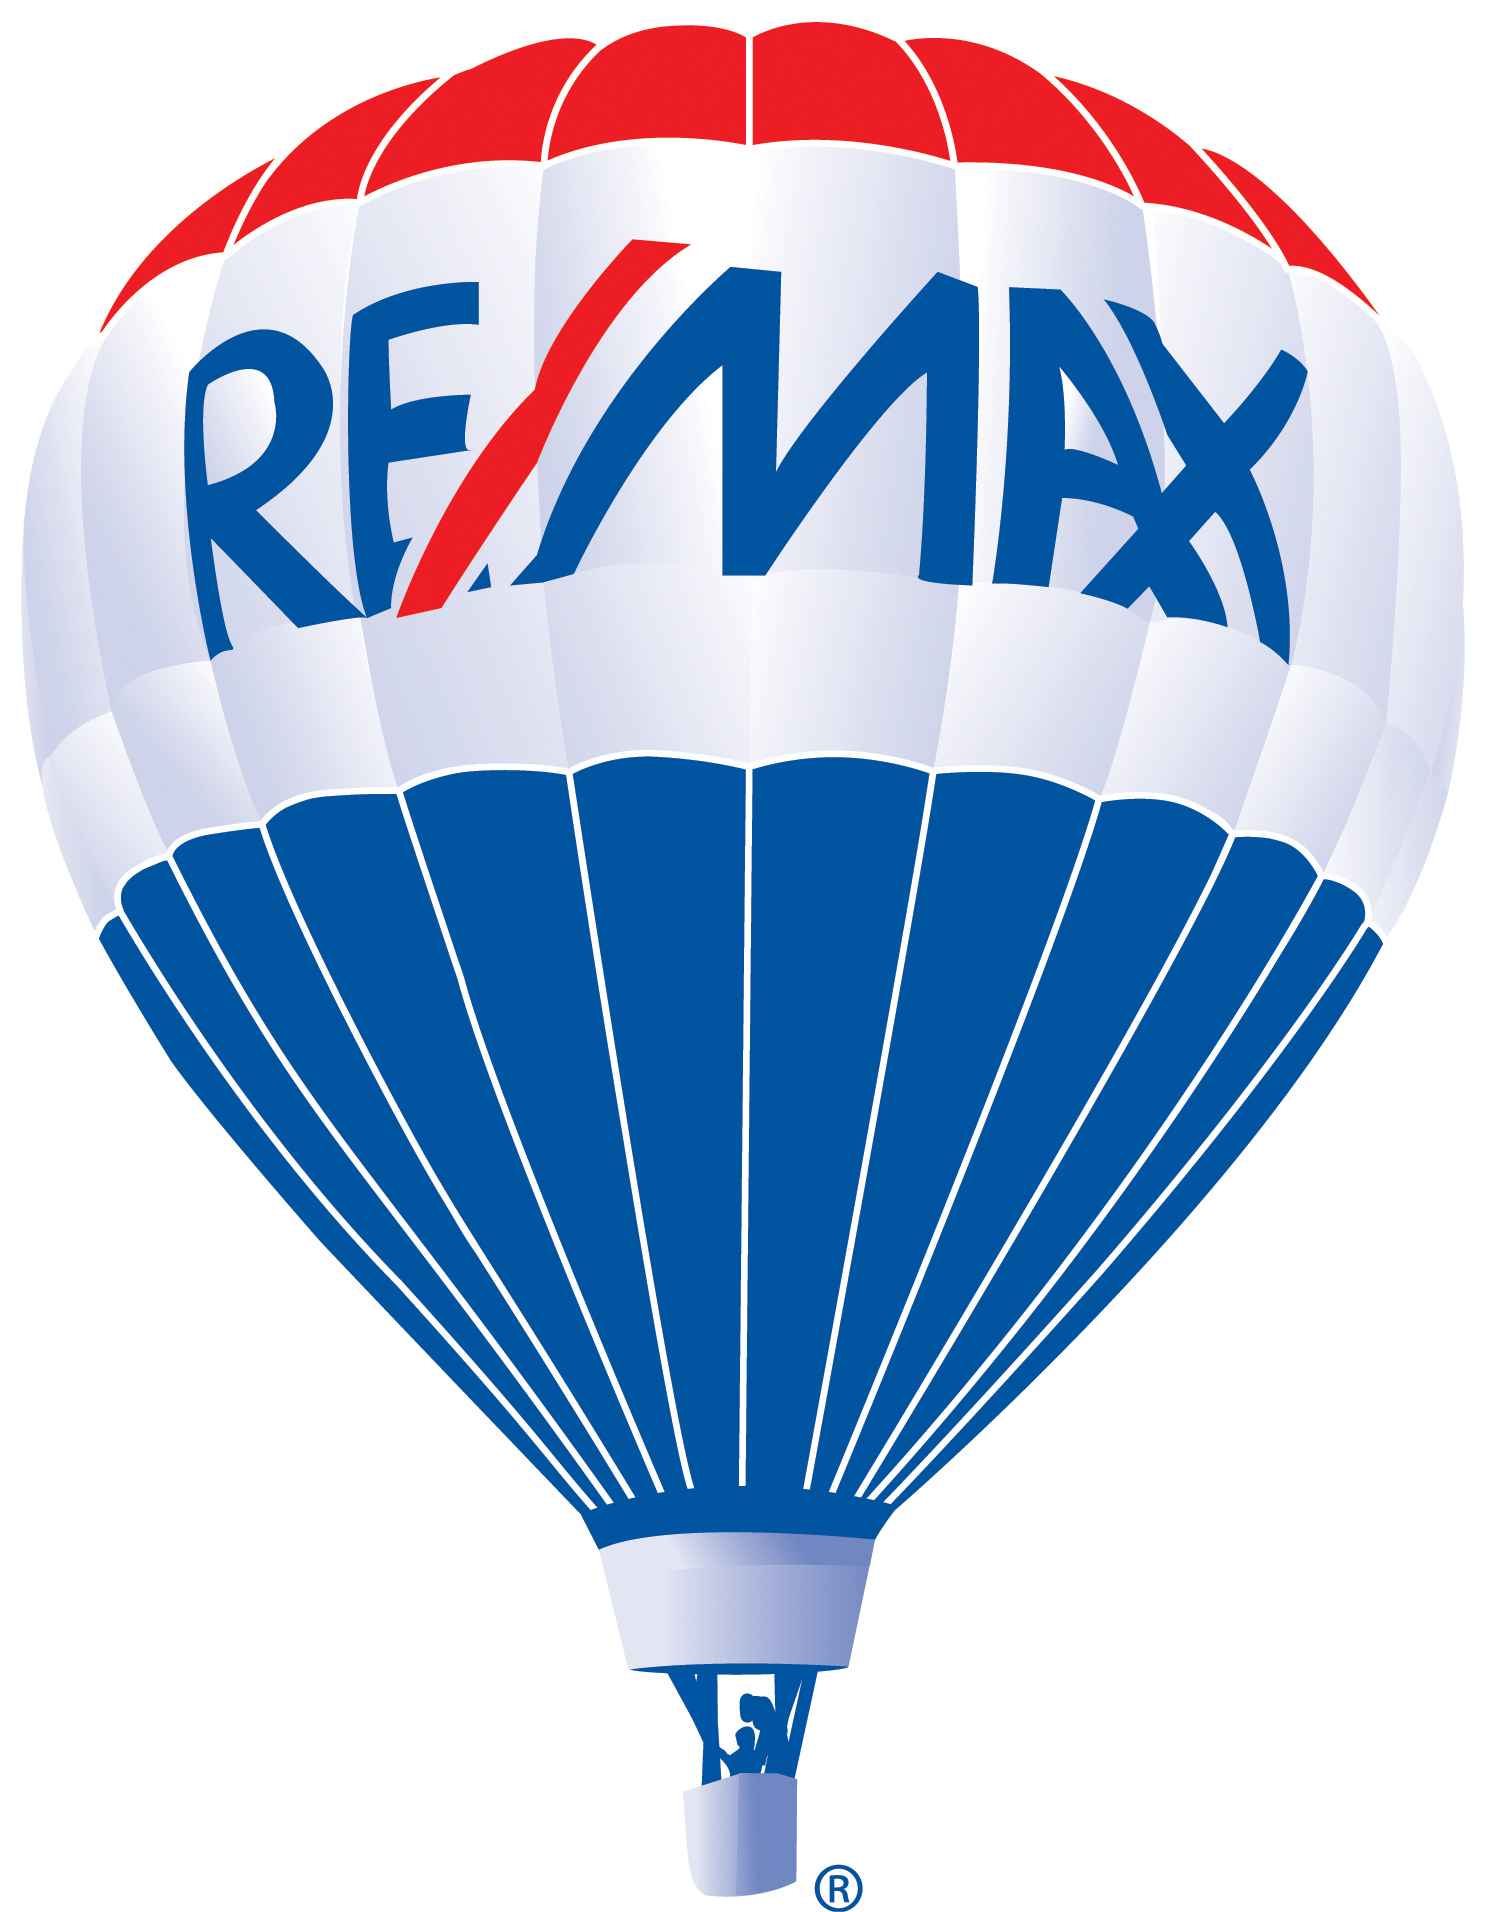 REMAX Balloon.jpg